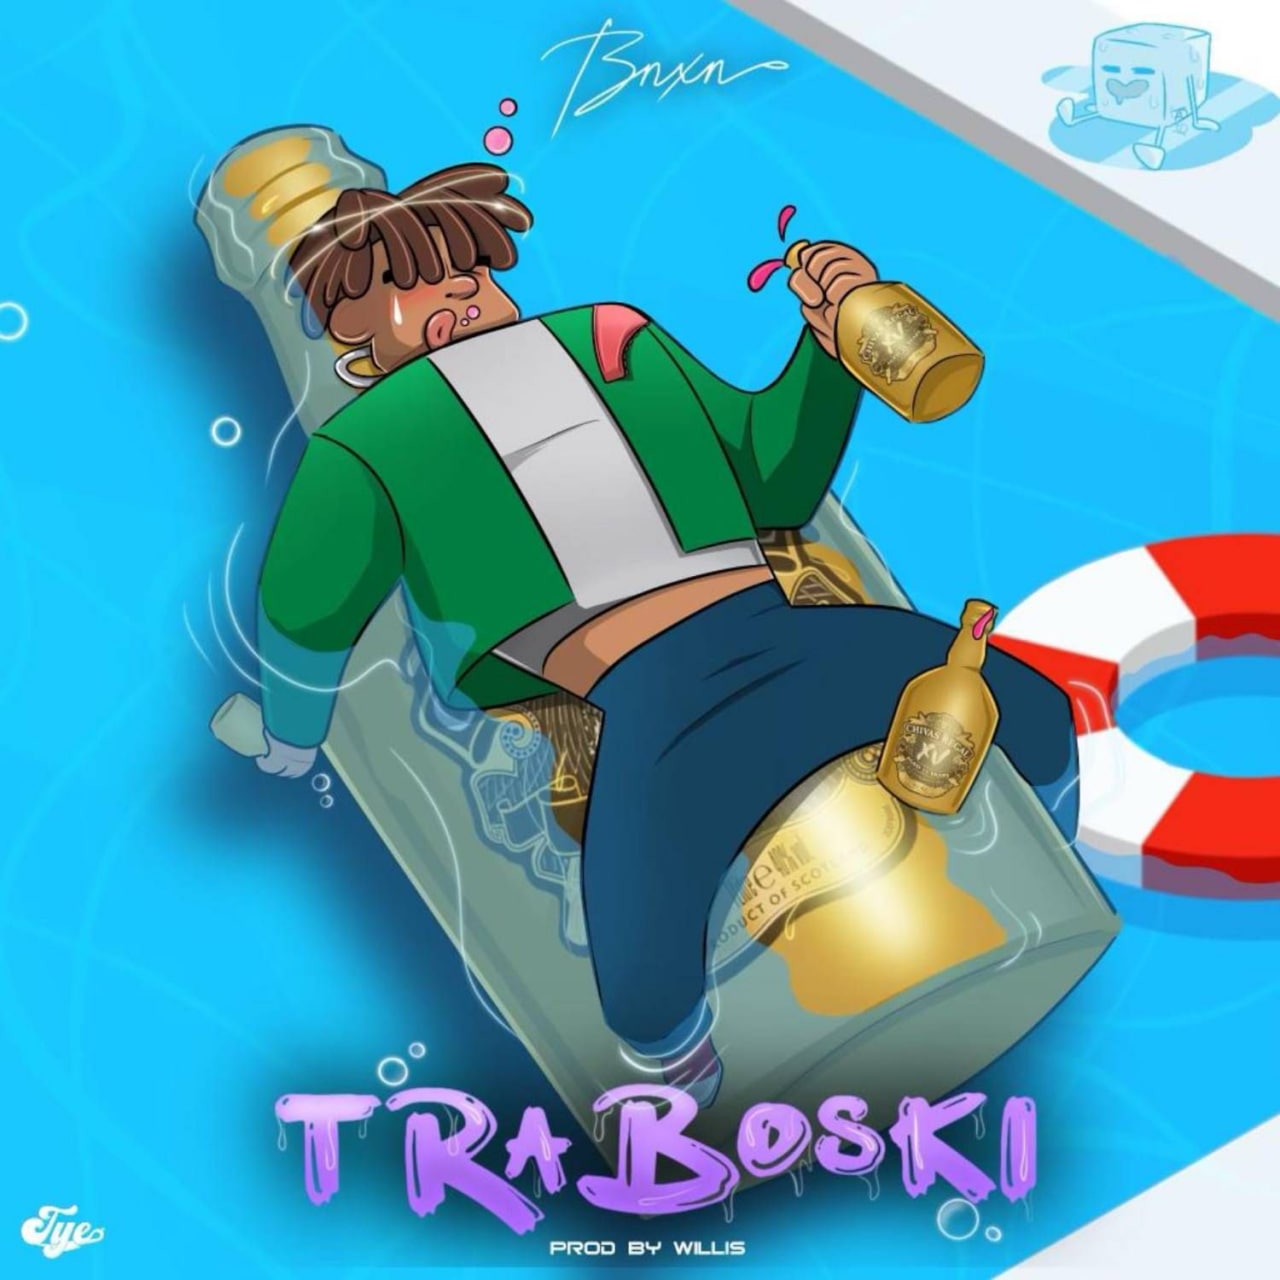 Traboski - BNXN